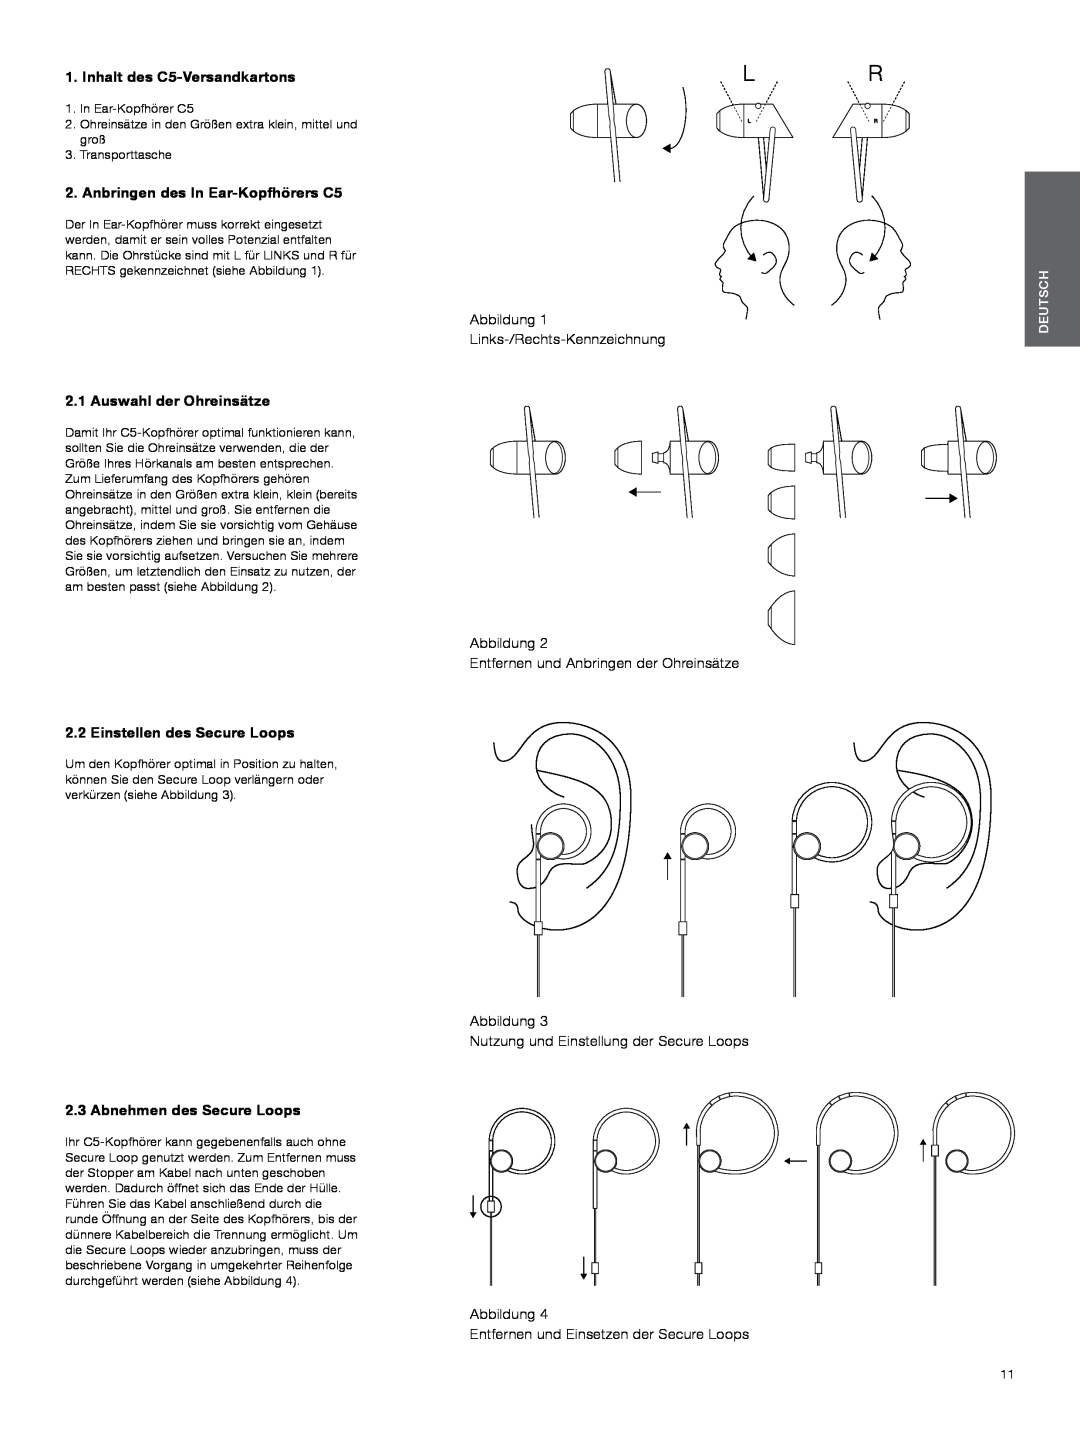 Bowers & Wilkins Inhalt des C5-Versandkartons, Anbringen des In Ear-KopfhörersC5, Auswahl der Ohreinsätze, Abbildung 